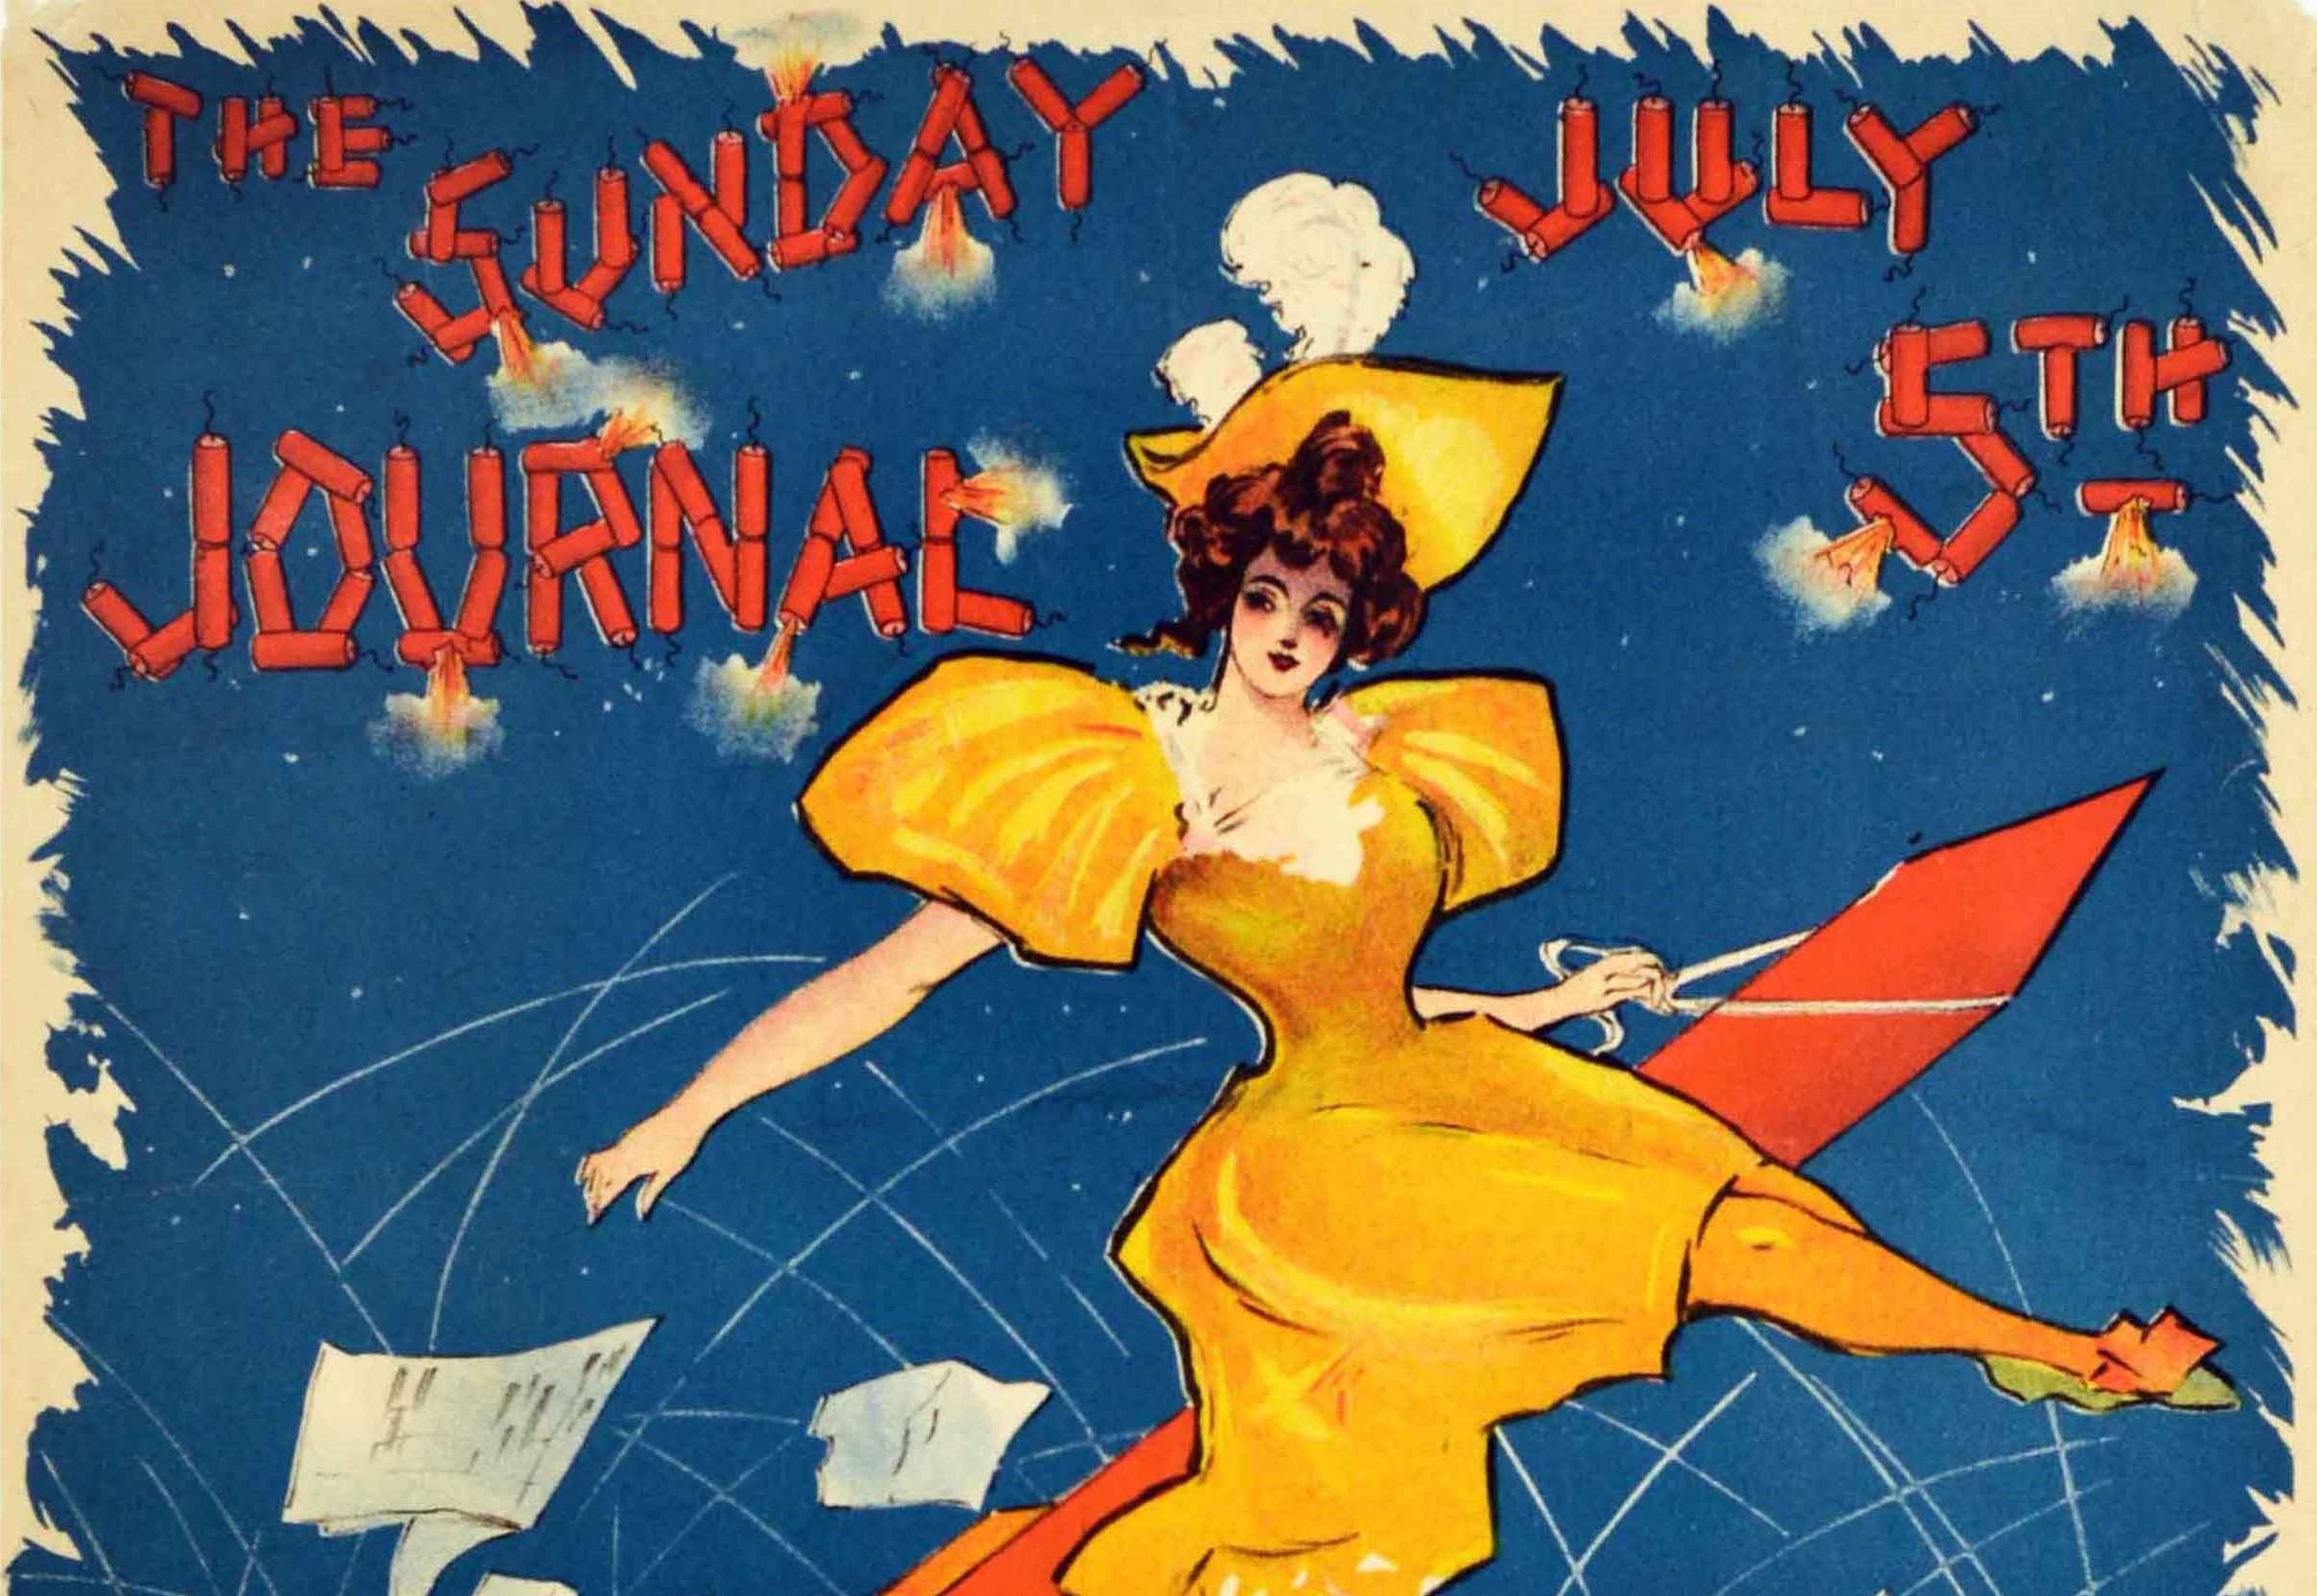 Original Antique Poster Sunday Journal July 5th Fireworks Belle Epoque Design - Print by Ernest Haskell